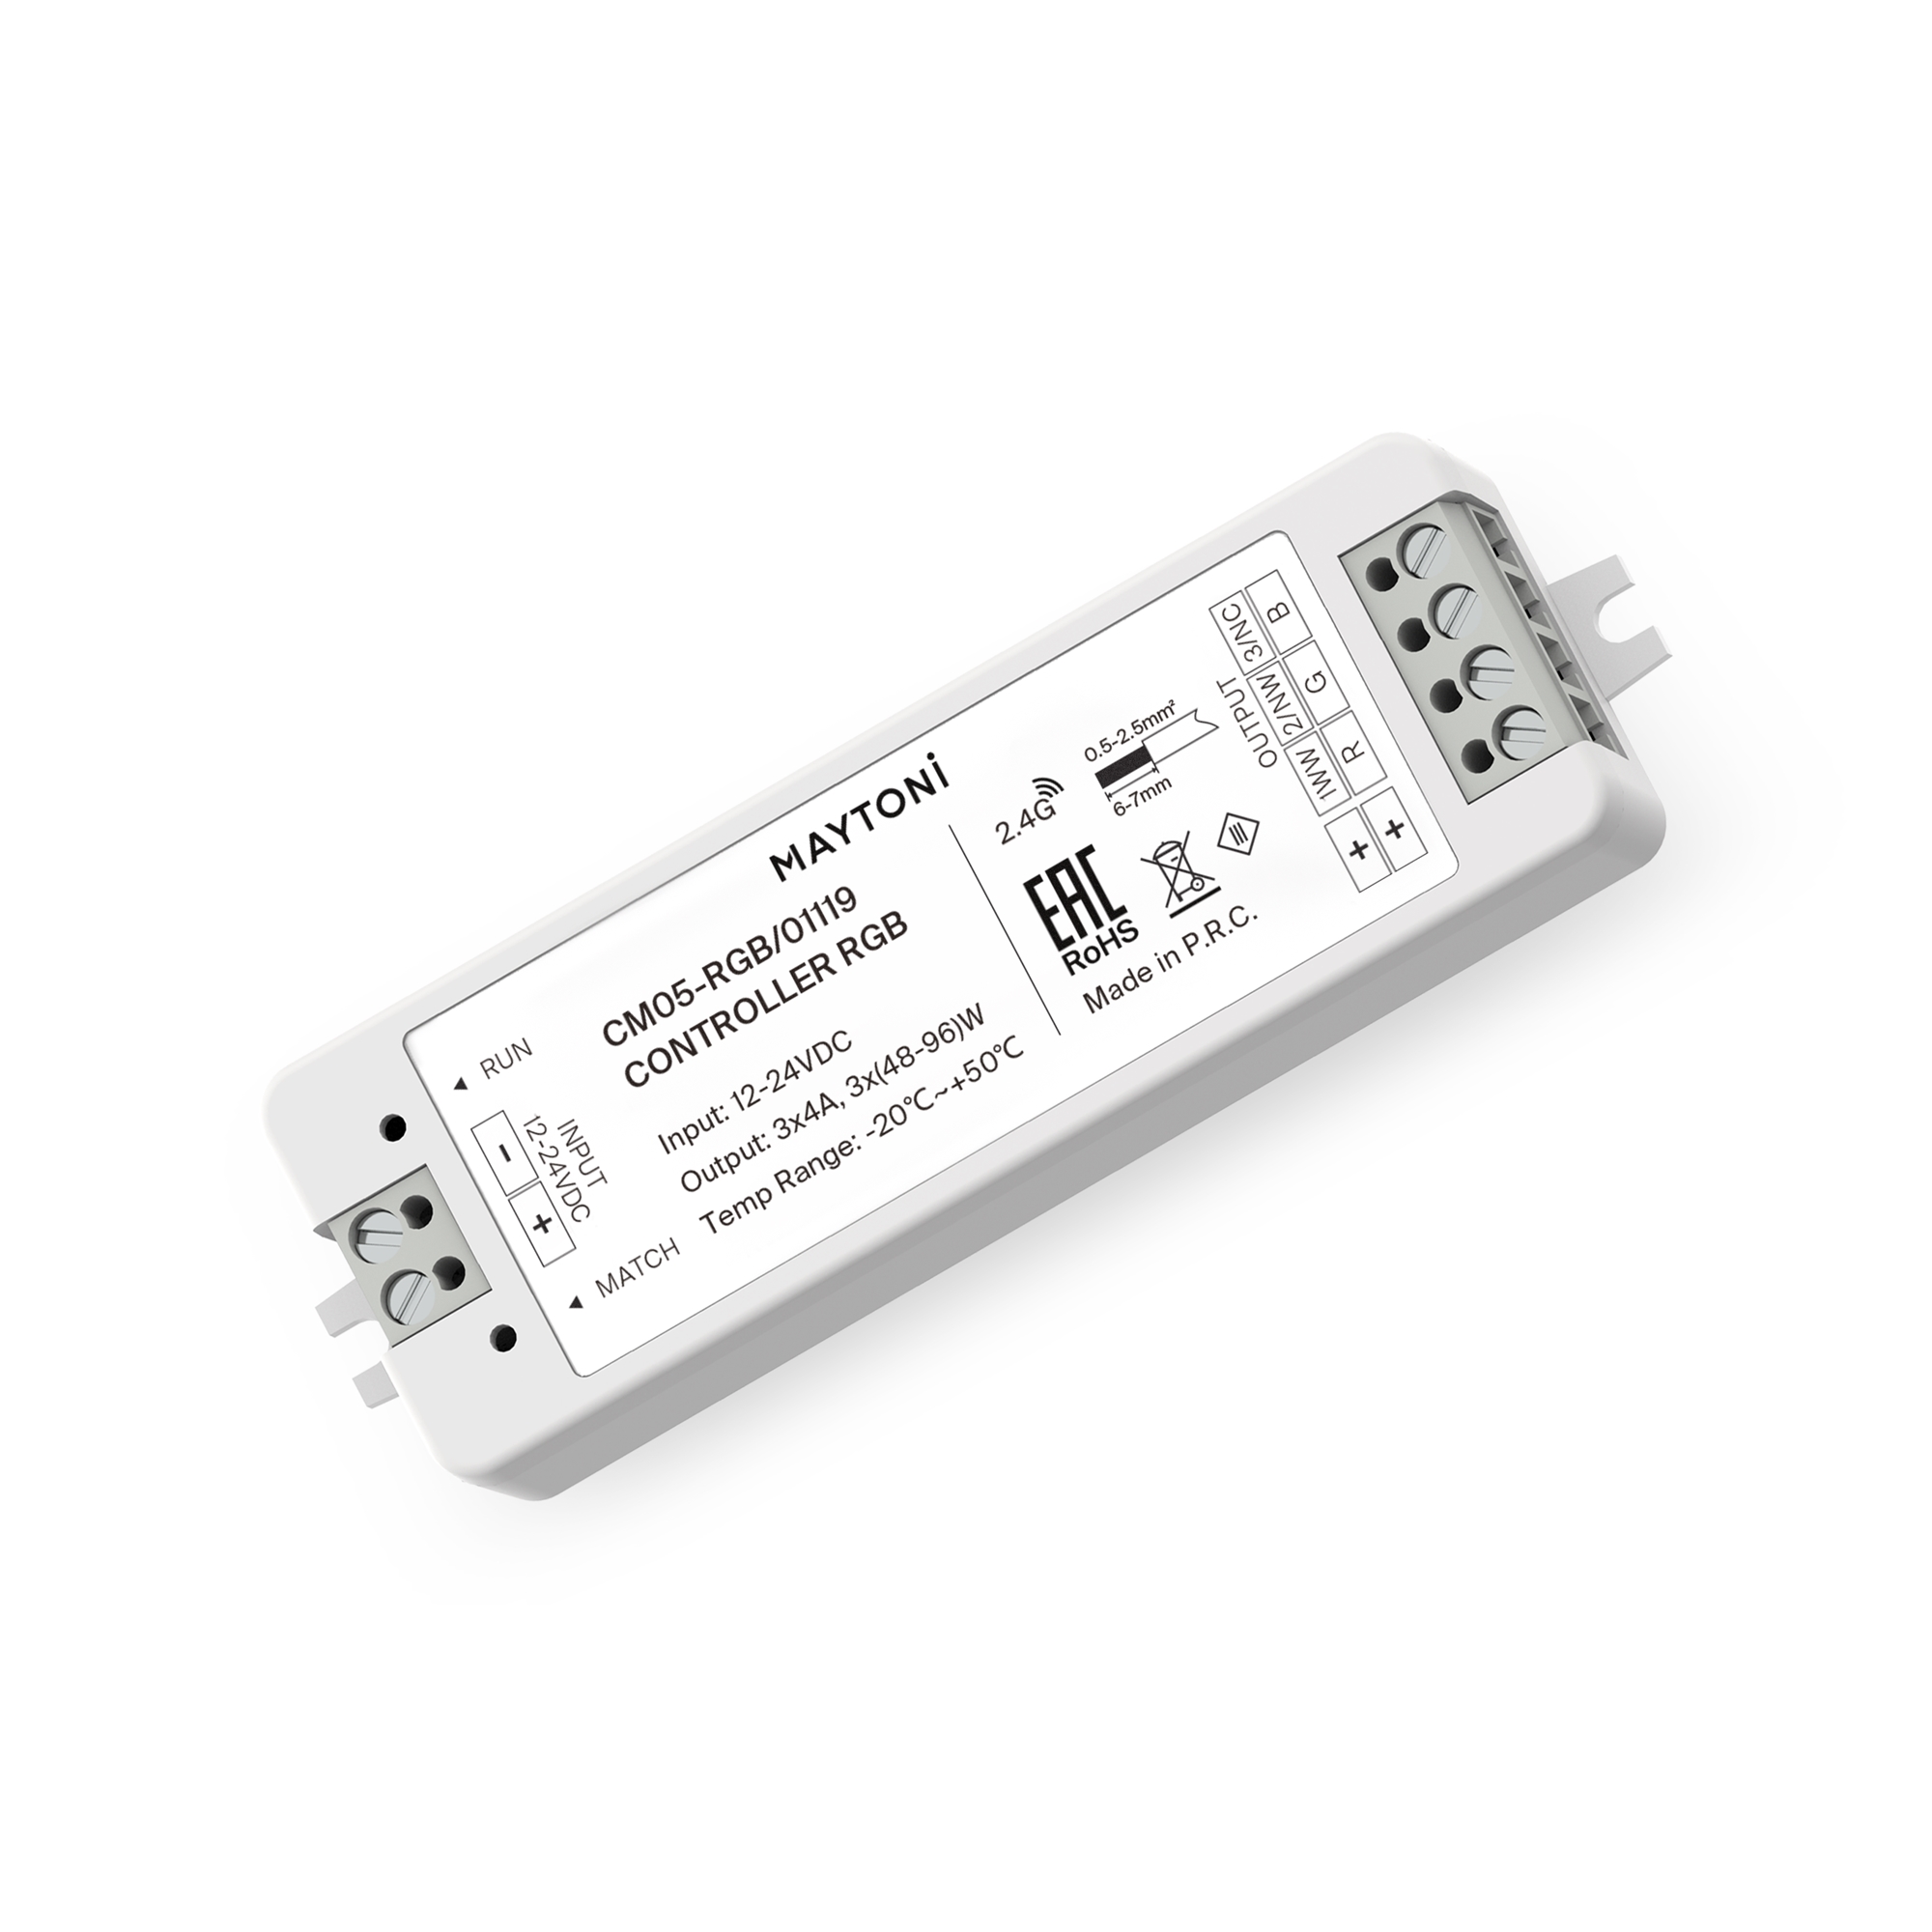 Контроллер для светодиодной ленты RGB 144Вт/288Вт 01119 контроллер для светодиодной ленты rgb 72вт 144вт 01125